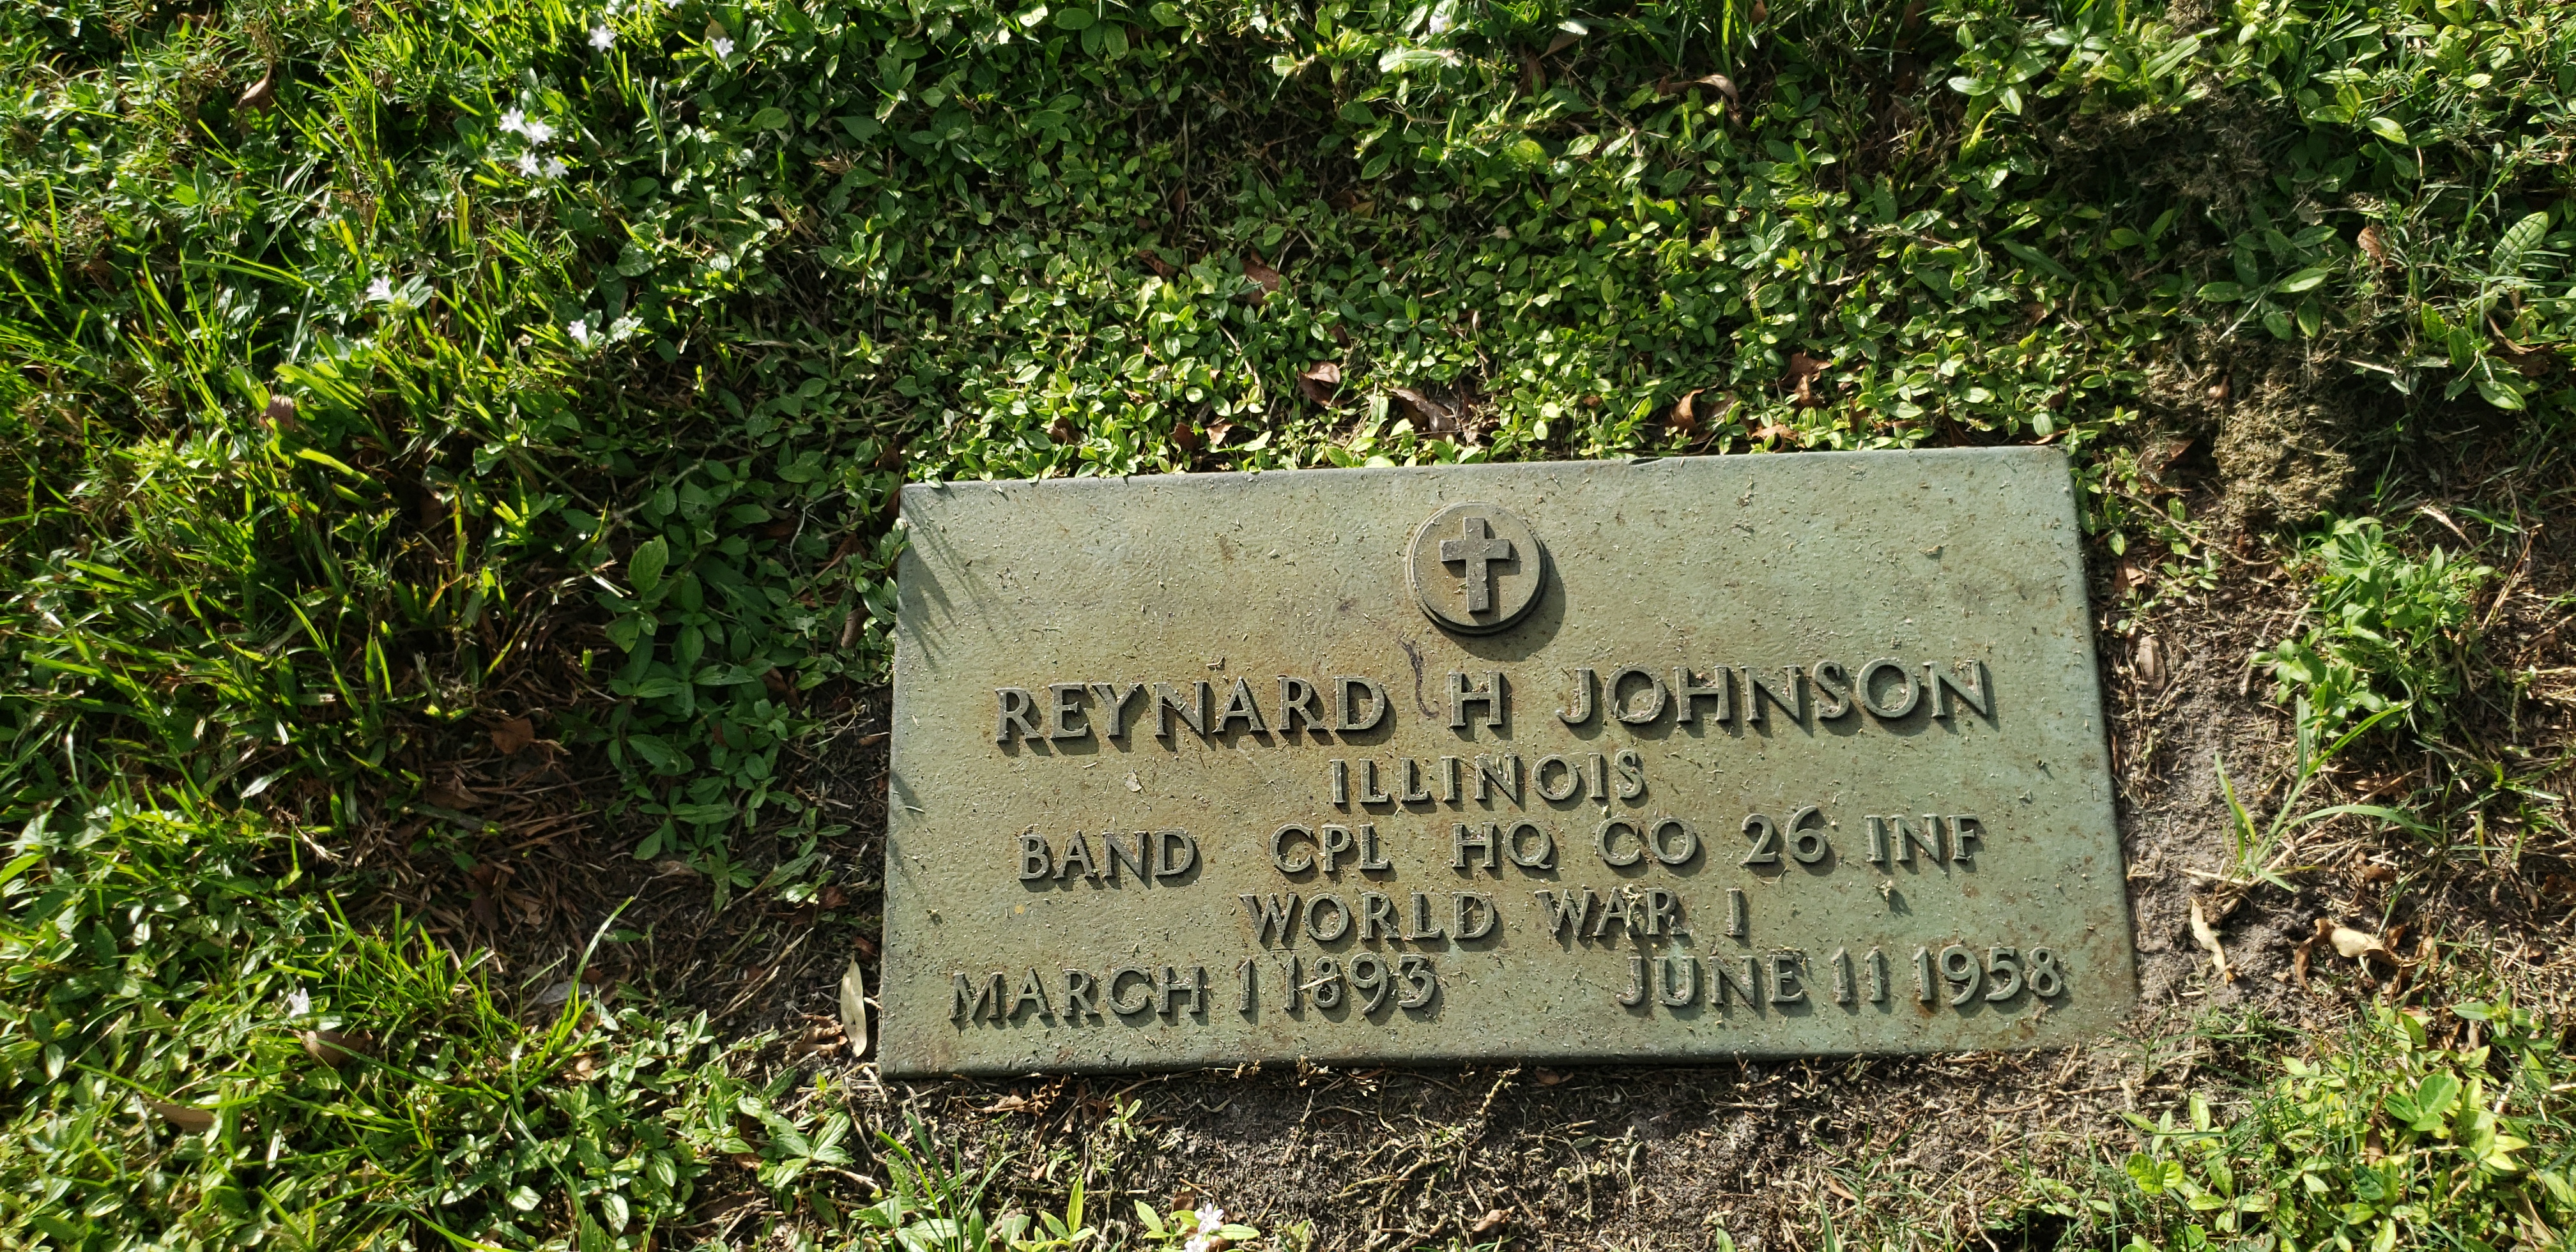 Reynard H Johnson